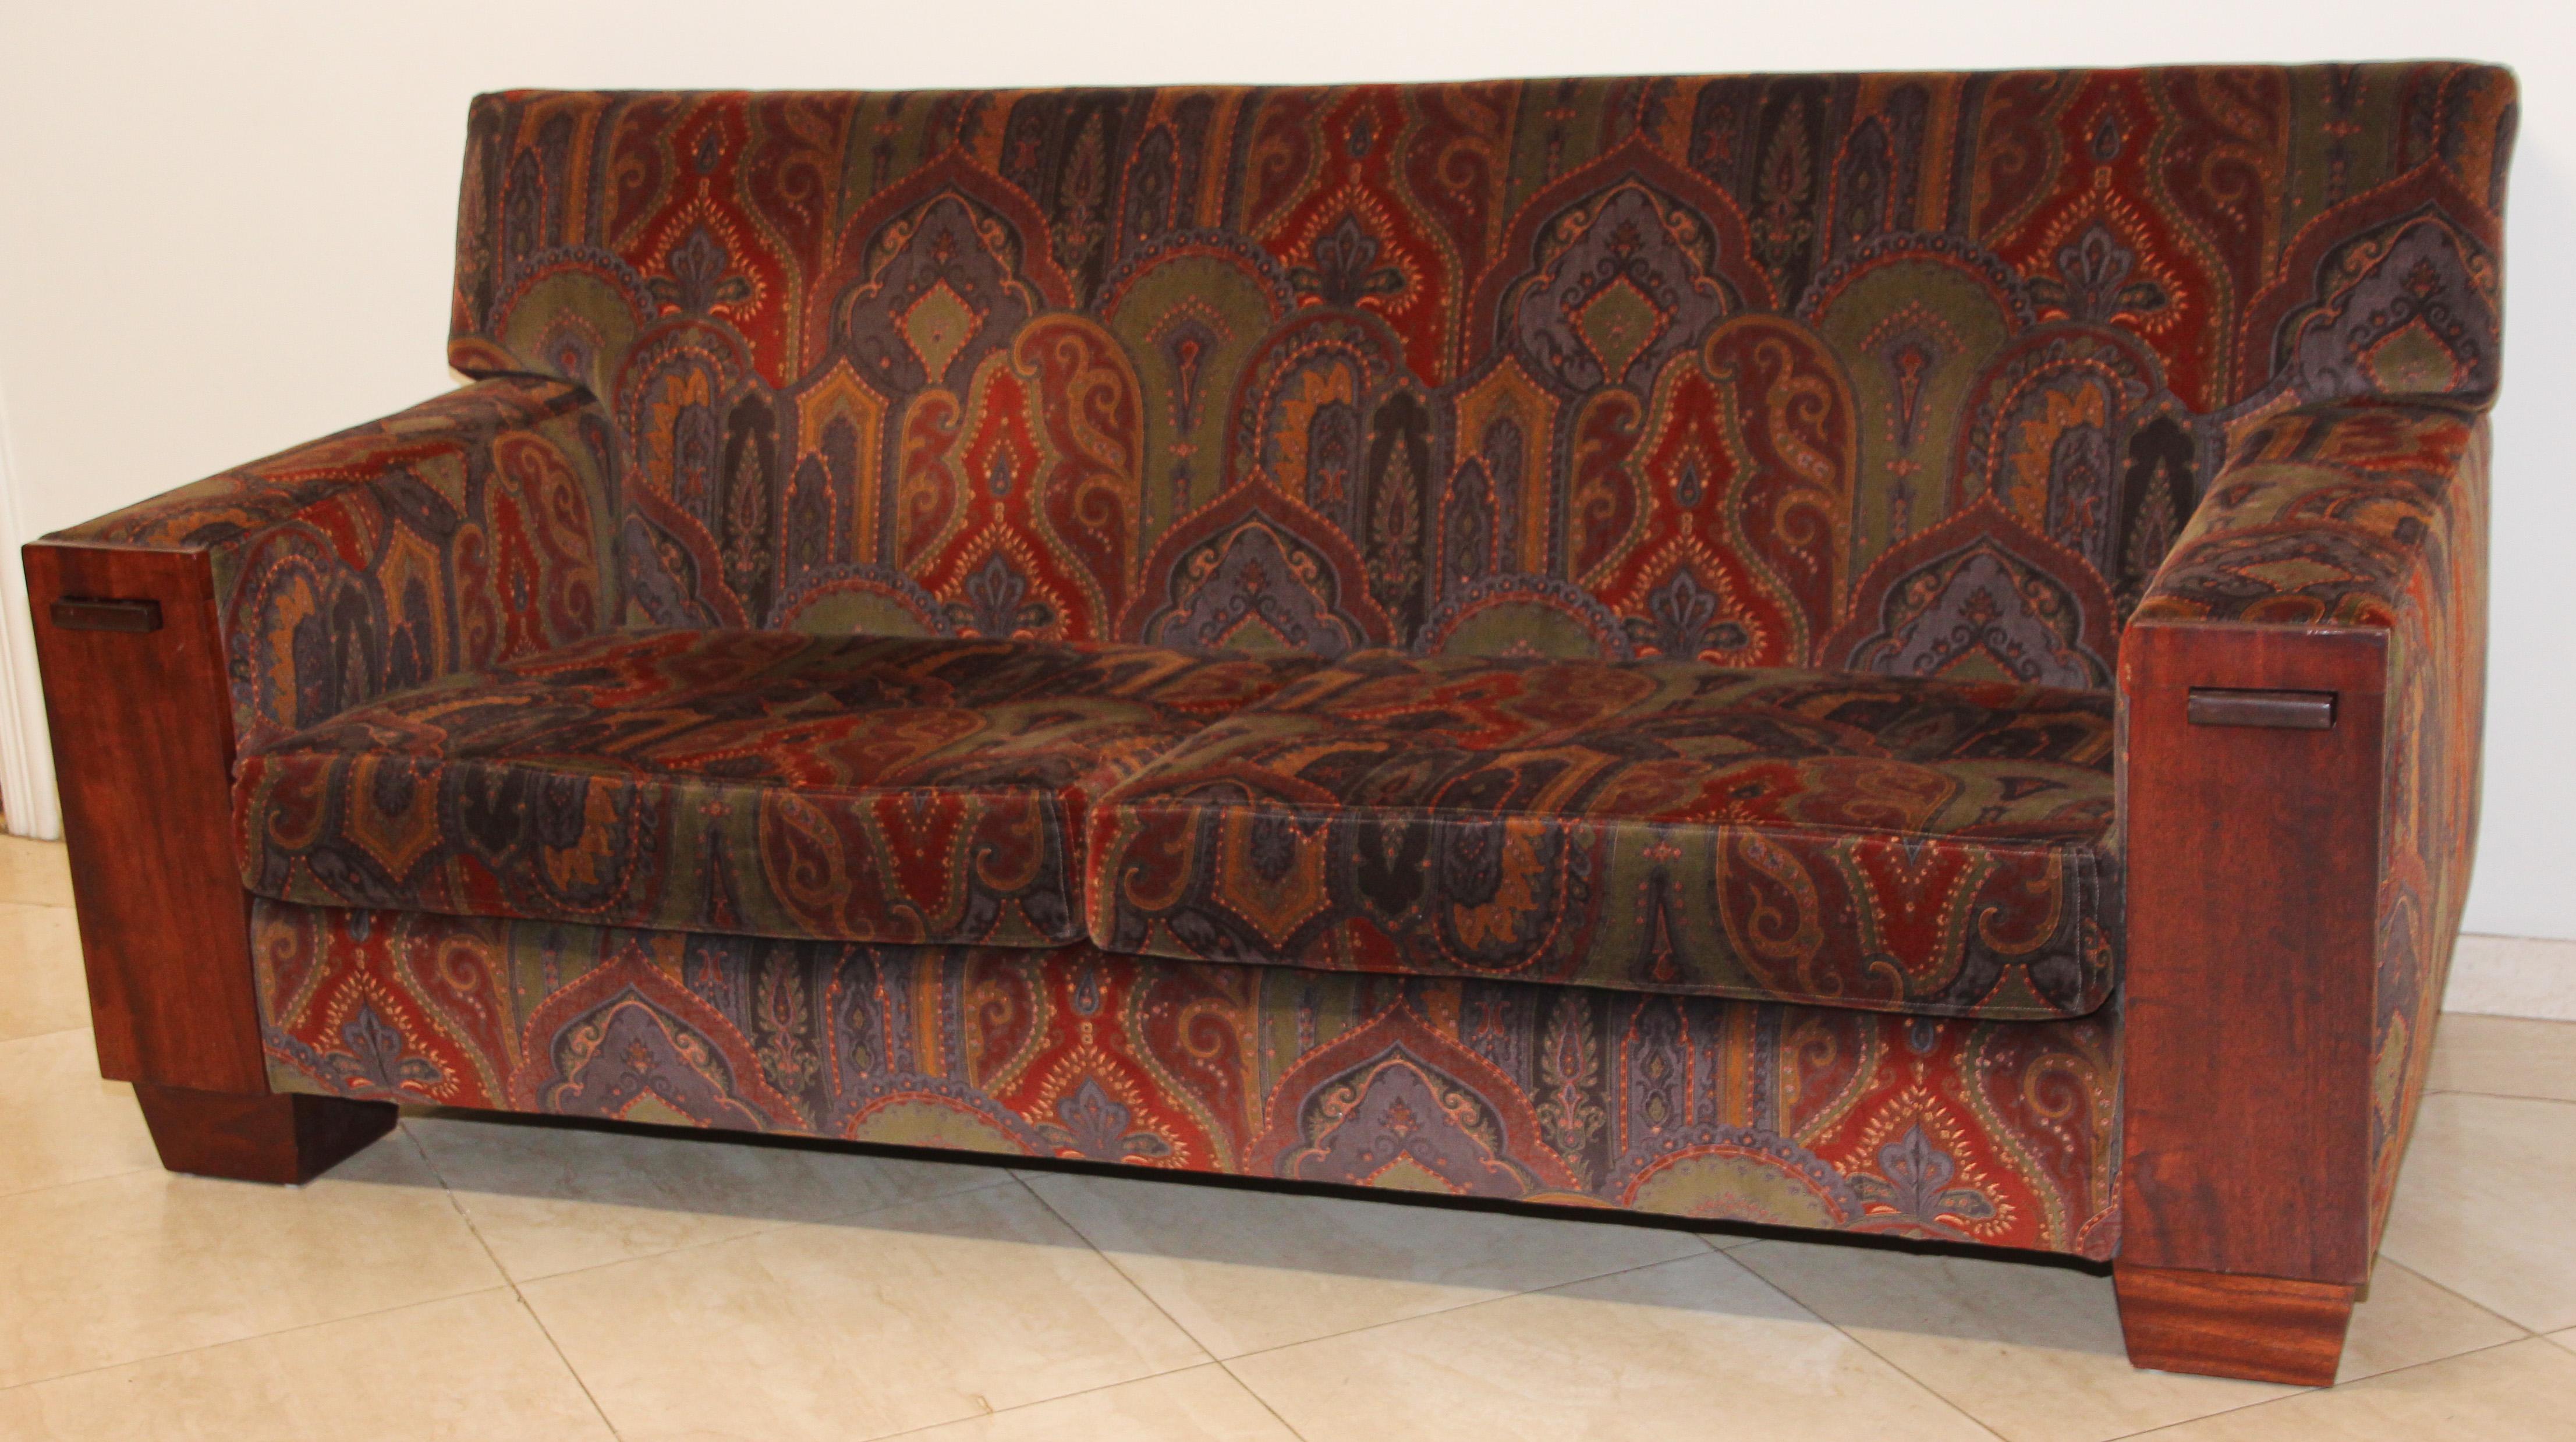 Vintage Moroccan Art Deco sofa settee upholstered with Fortuny style cut velvet Moorish fabric.
Sofa was upholstered with antique style very fine brocade damask cut out velvet fabric upholstery in the Venetian Moorish Fortuny  and Luigi Bevilacquat